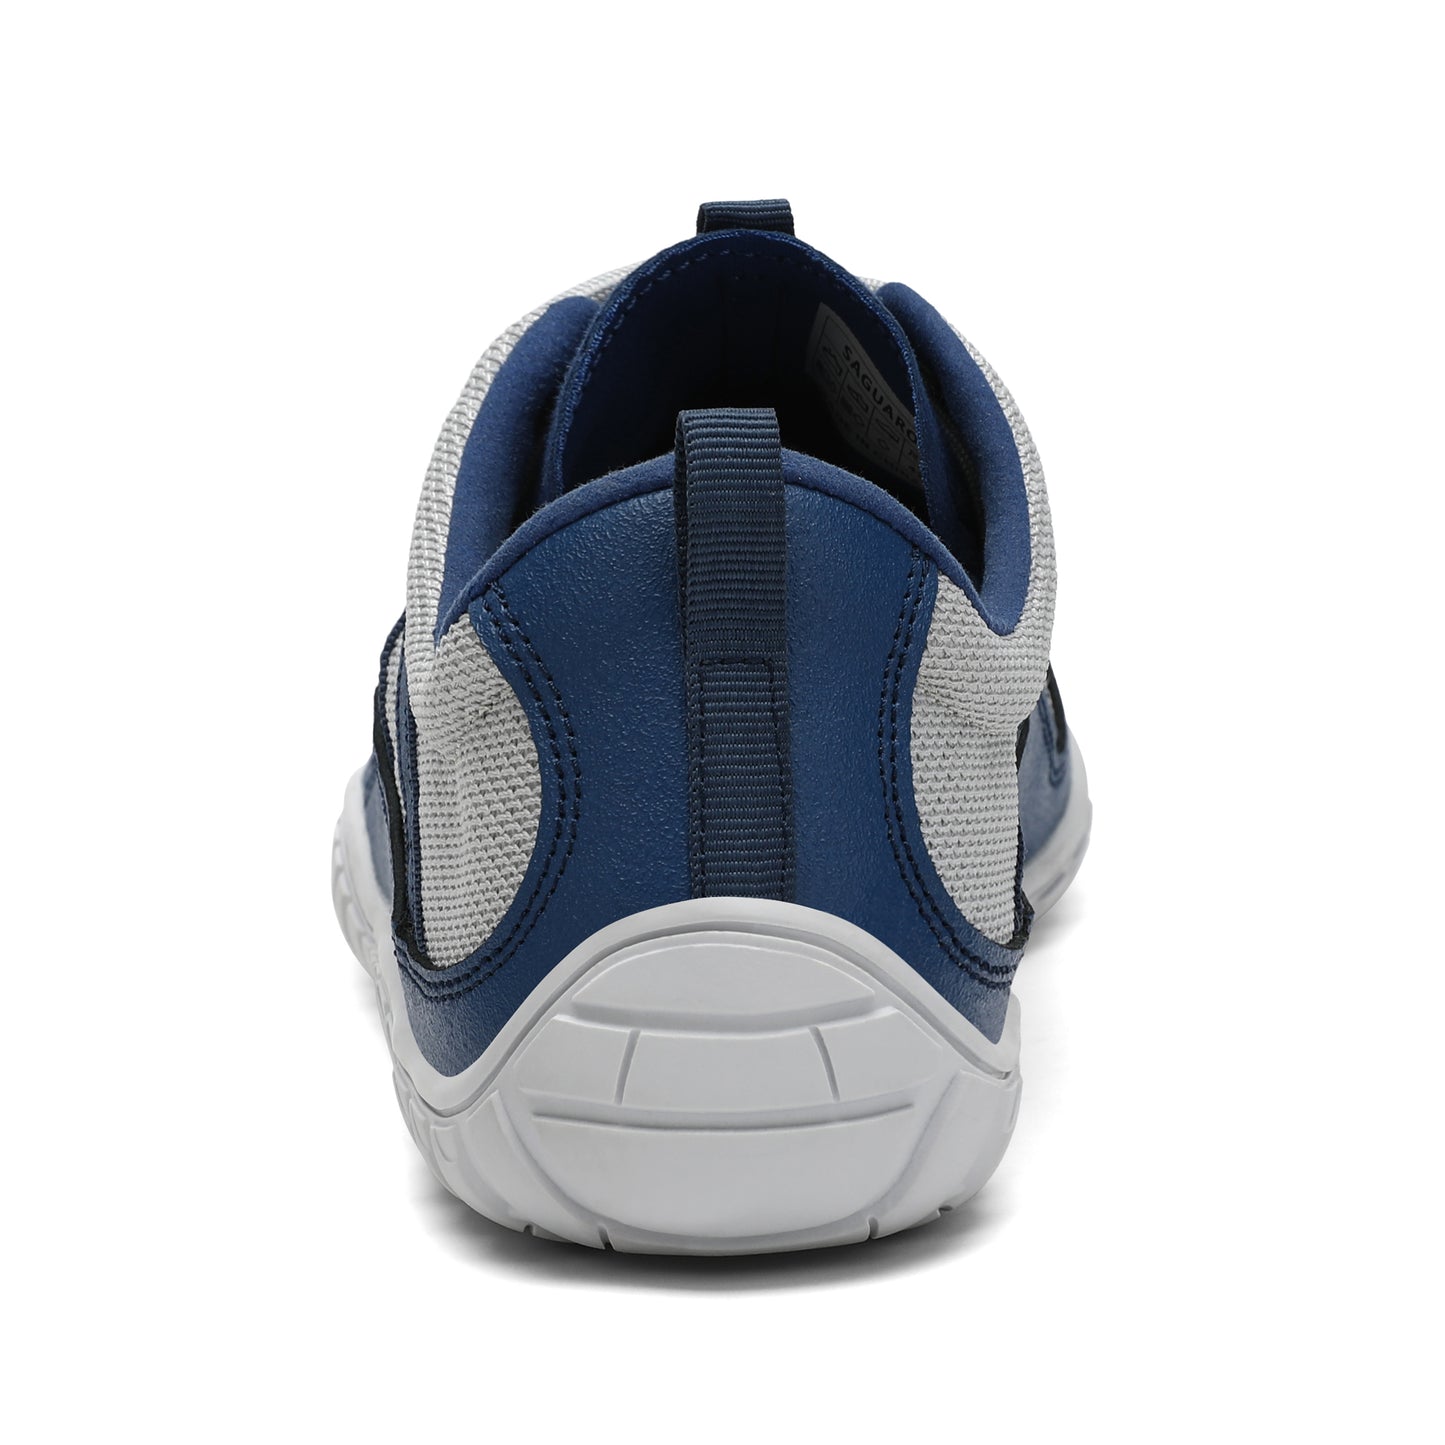 Forestep I - Azul - Barefoot shoes